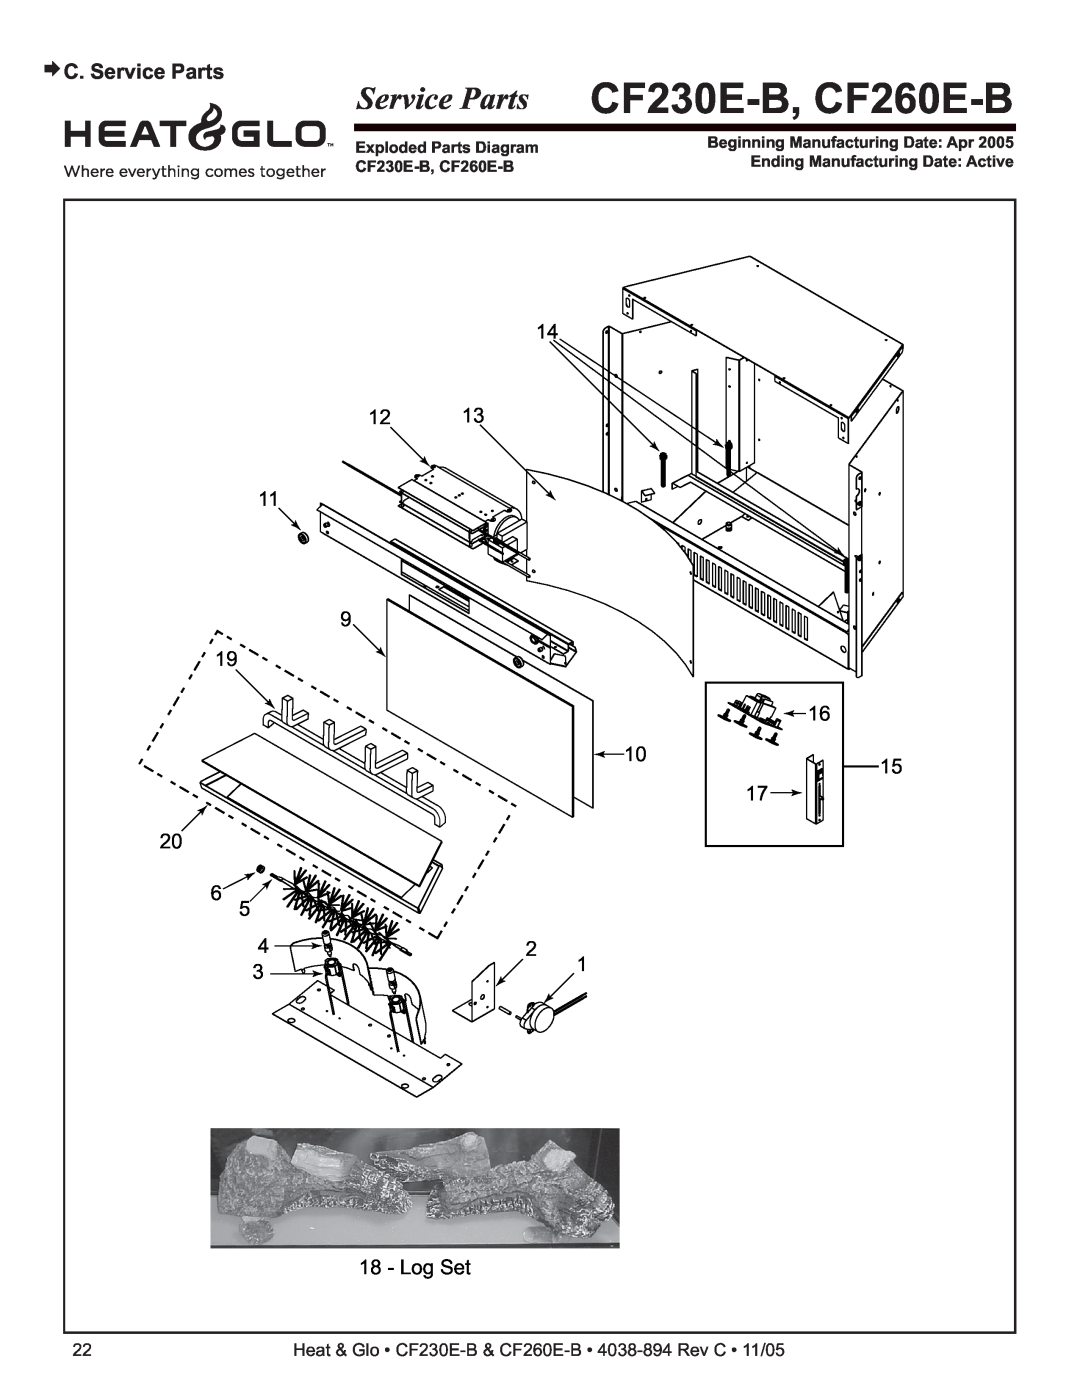 Heat & Glo LifeStyle owner manual CF230E-B, CF260E-B, C. Service Parts 